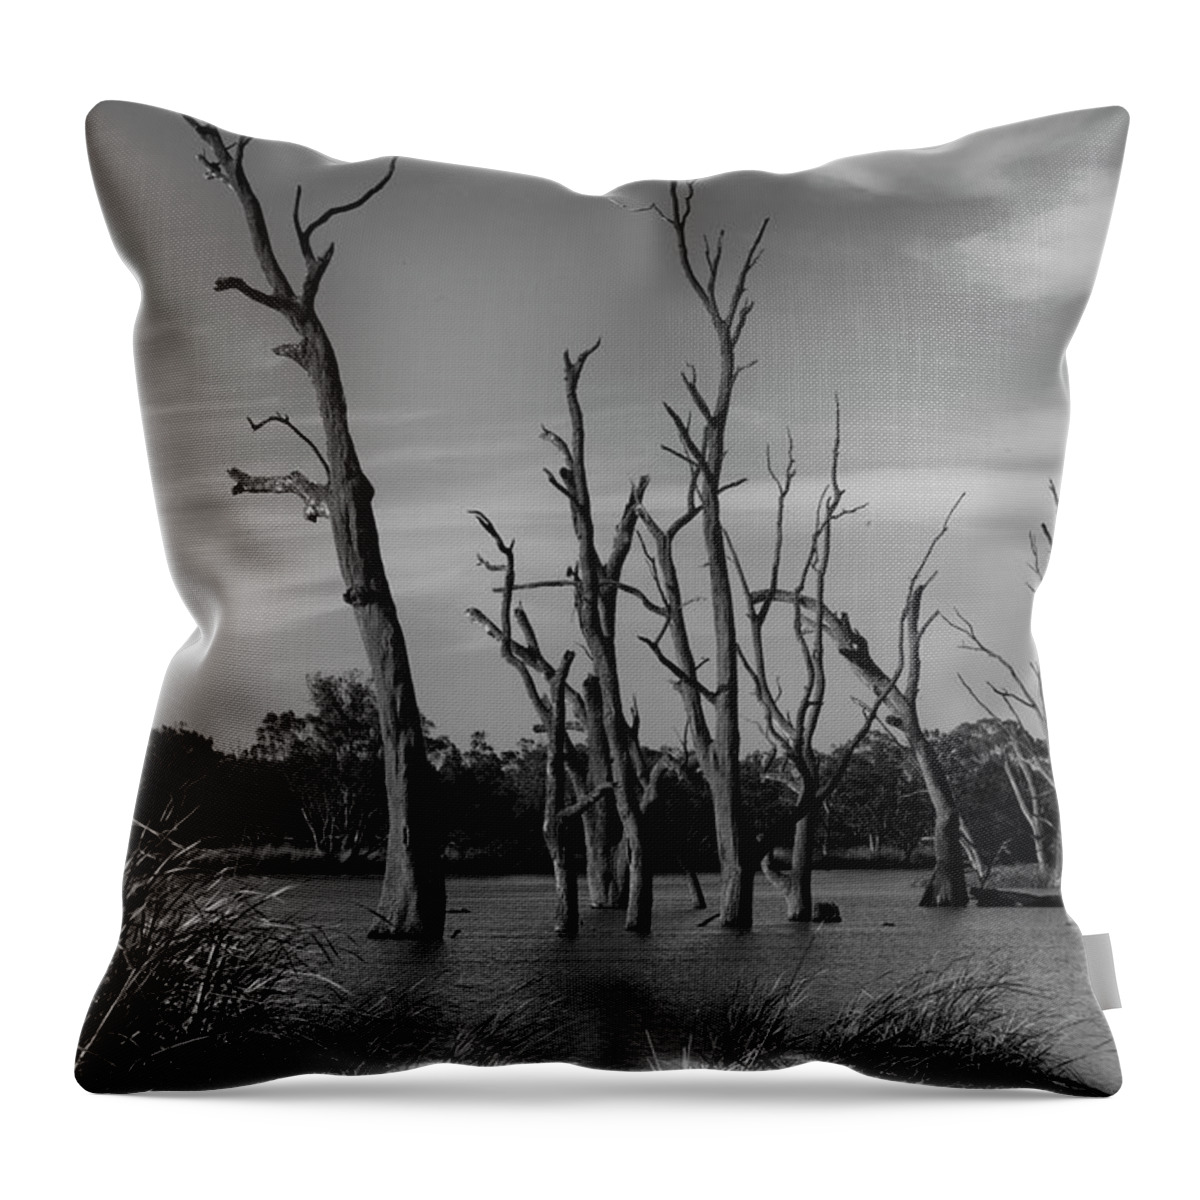 Tree Throw Pillow featuring the photograph Still standing V2 by Douglas Barnard